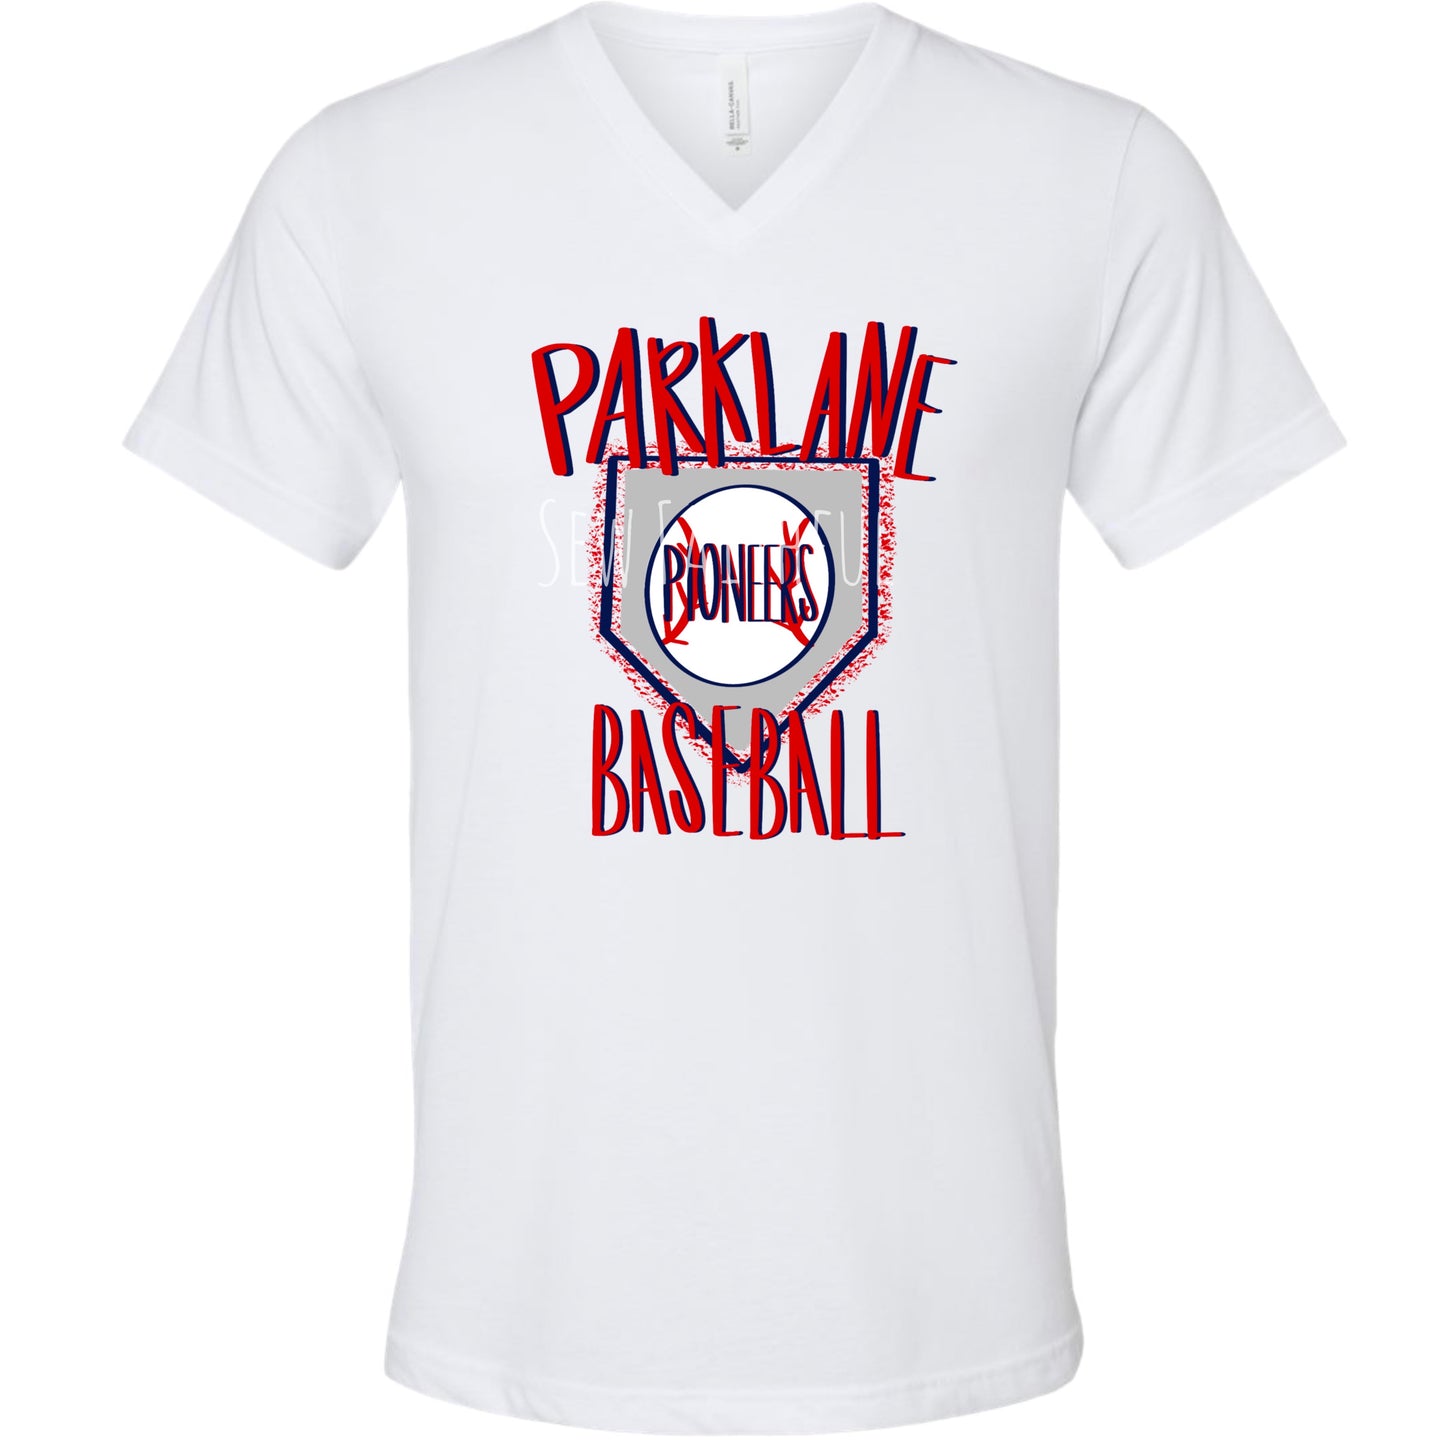 Parklane Pioneers Baseball